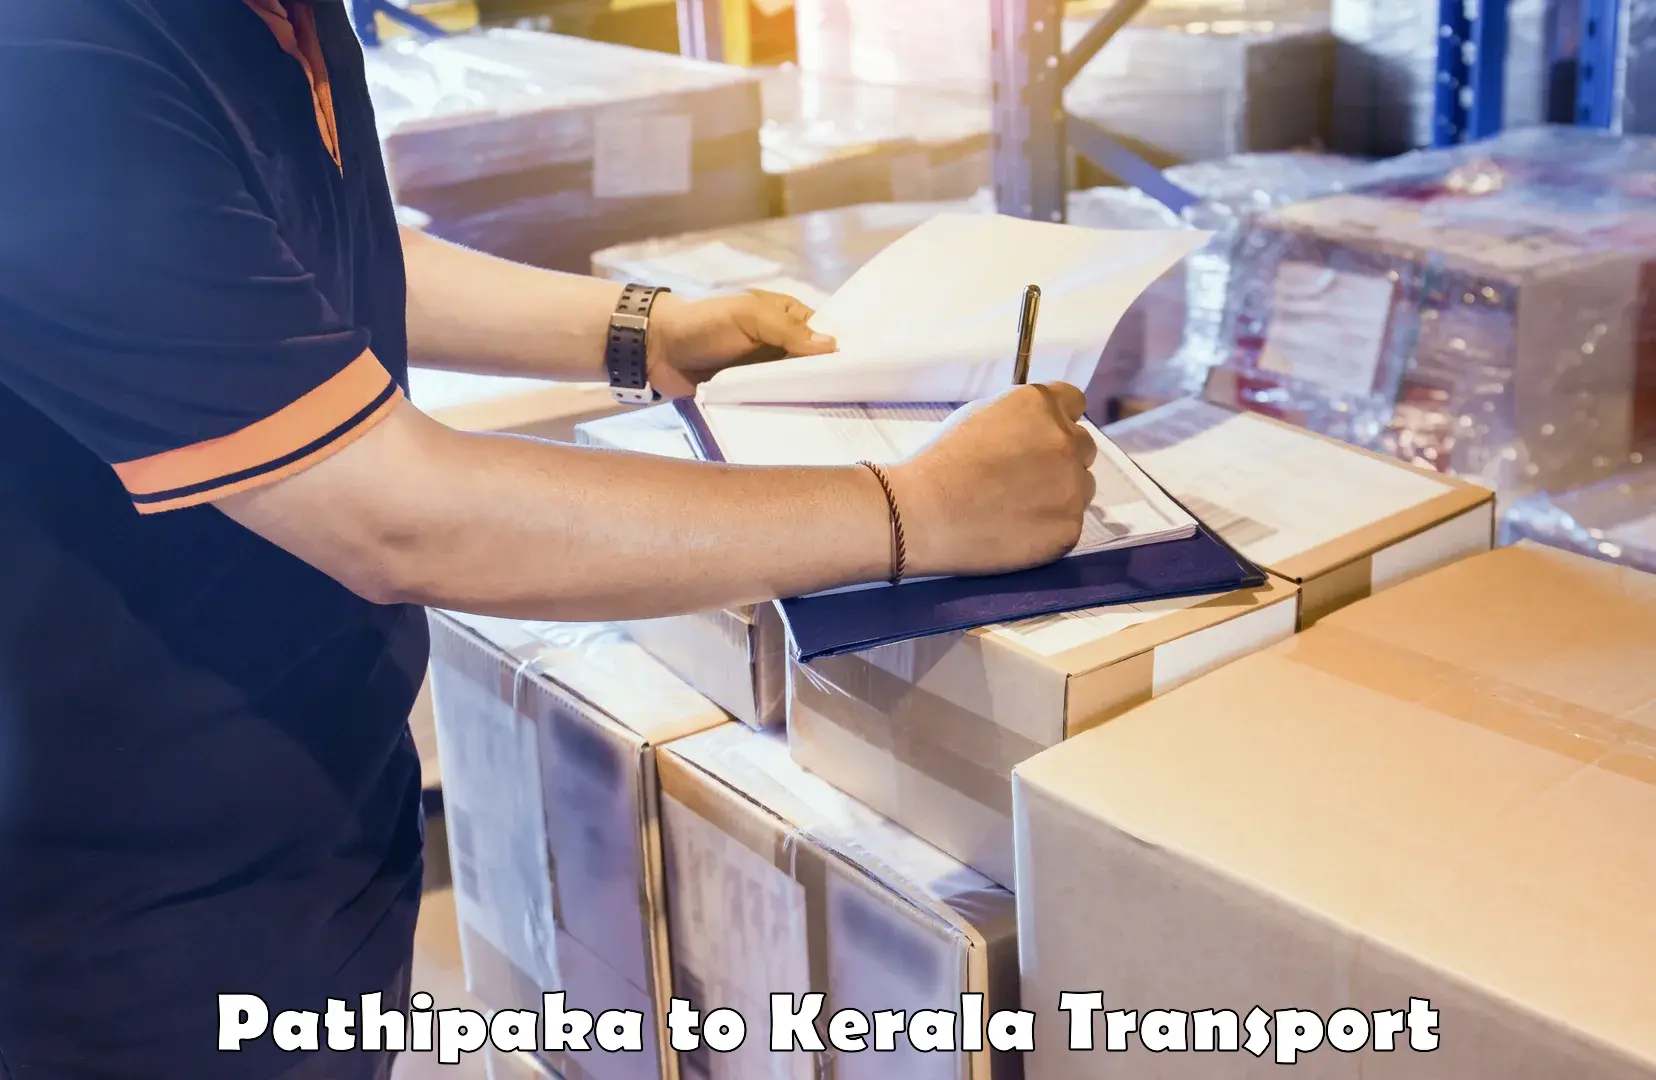 Delivery service Pathipaka to Kerala